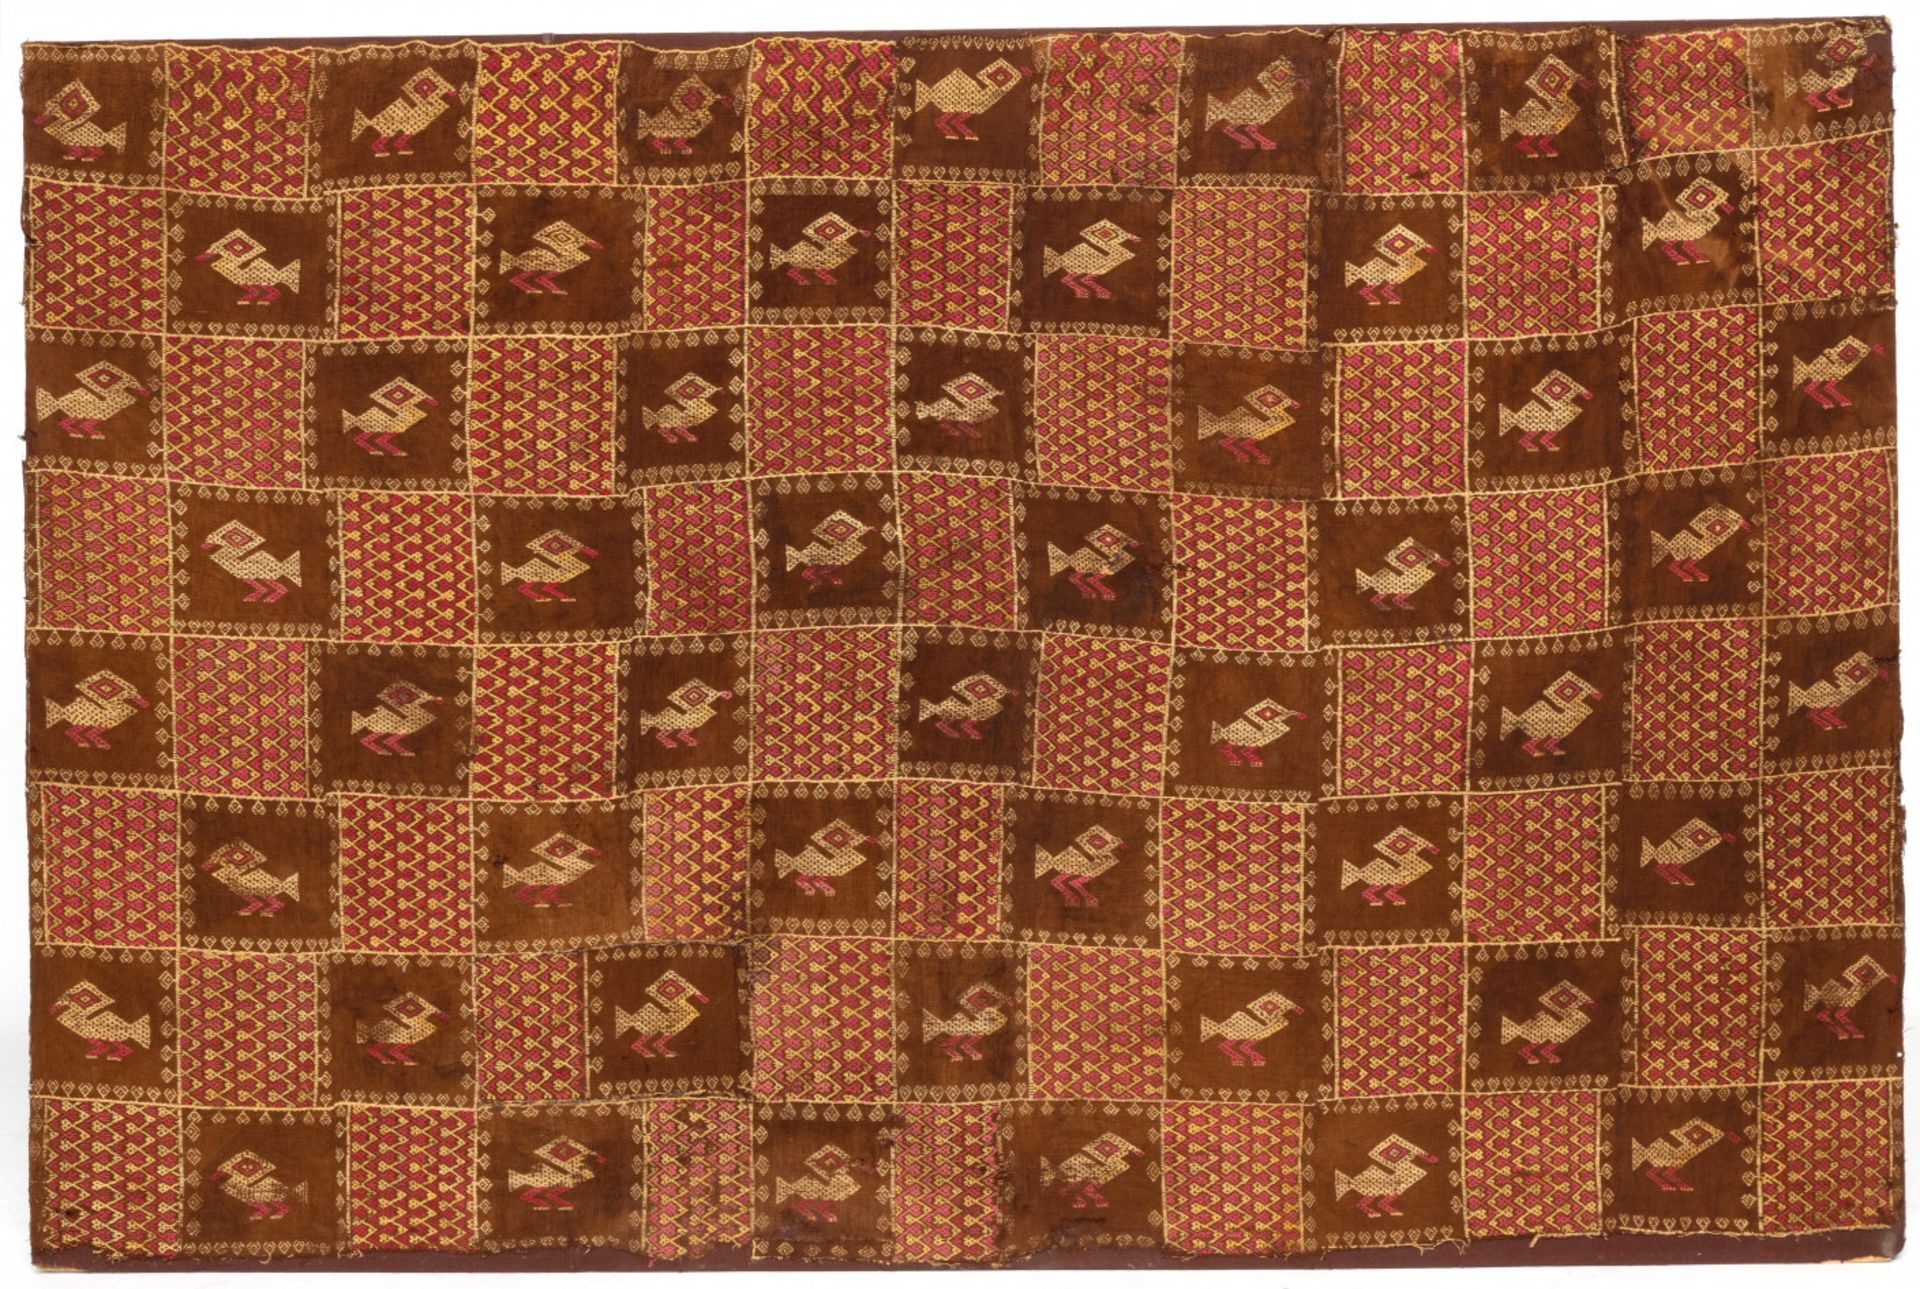 Peru, Chancay, large textile panel, ca. 1200-1470,